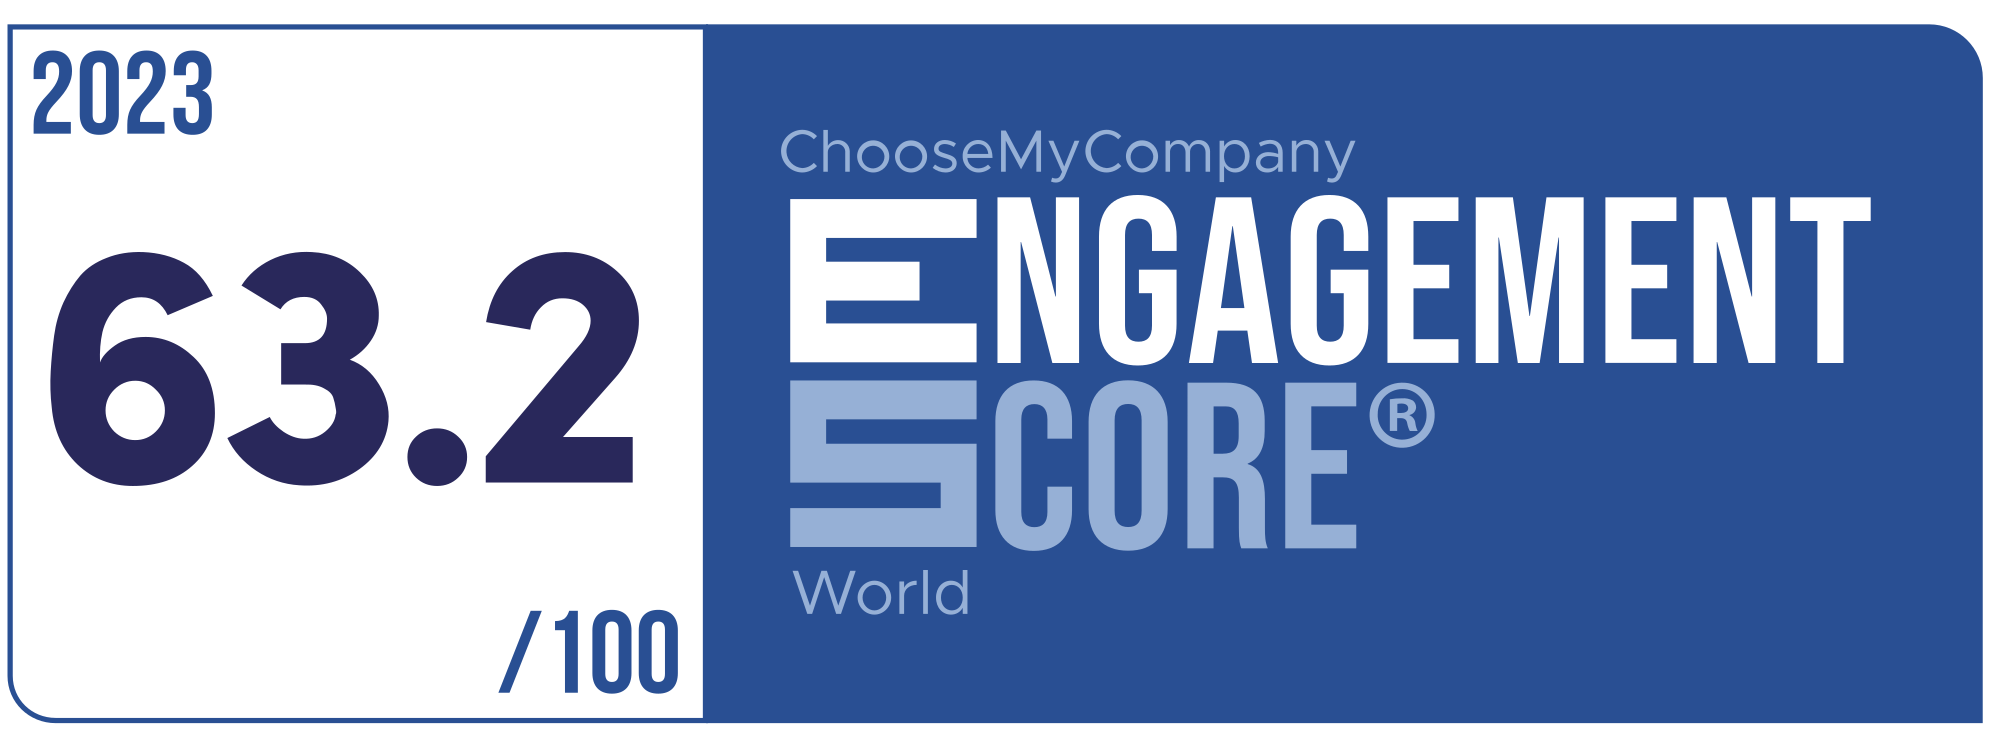 Label Engagement Score 2023 World